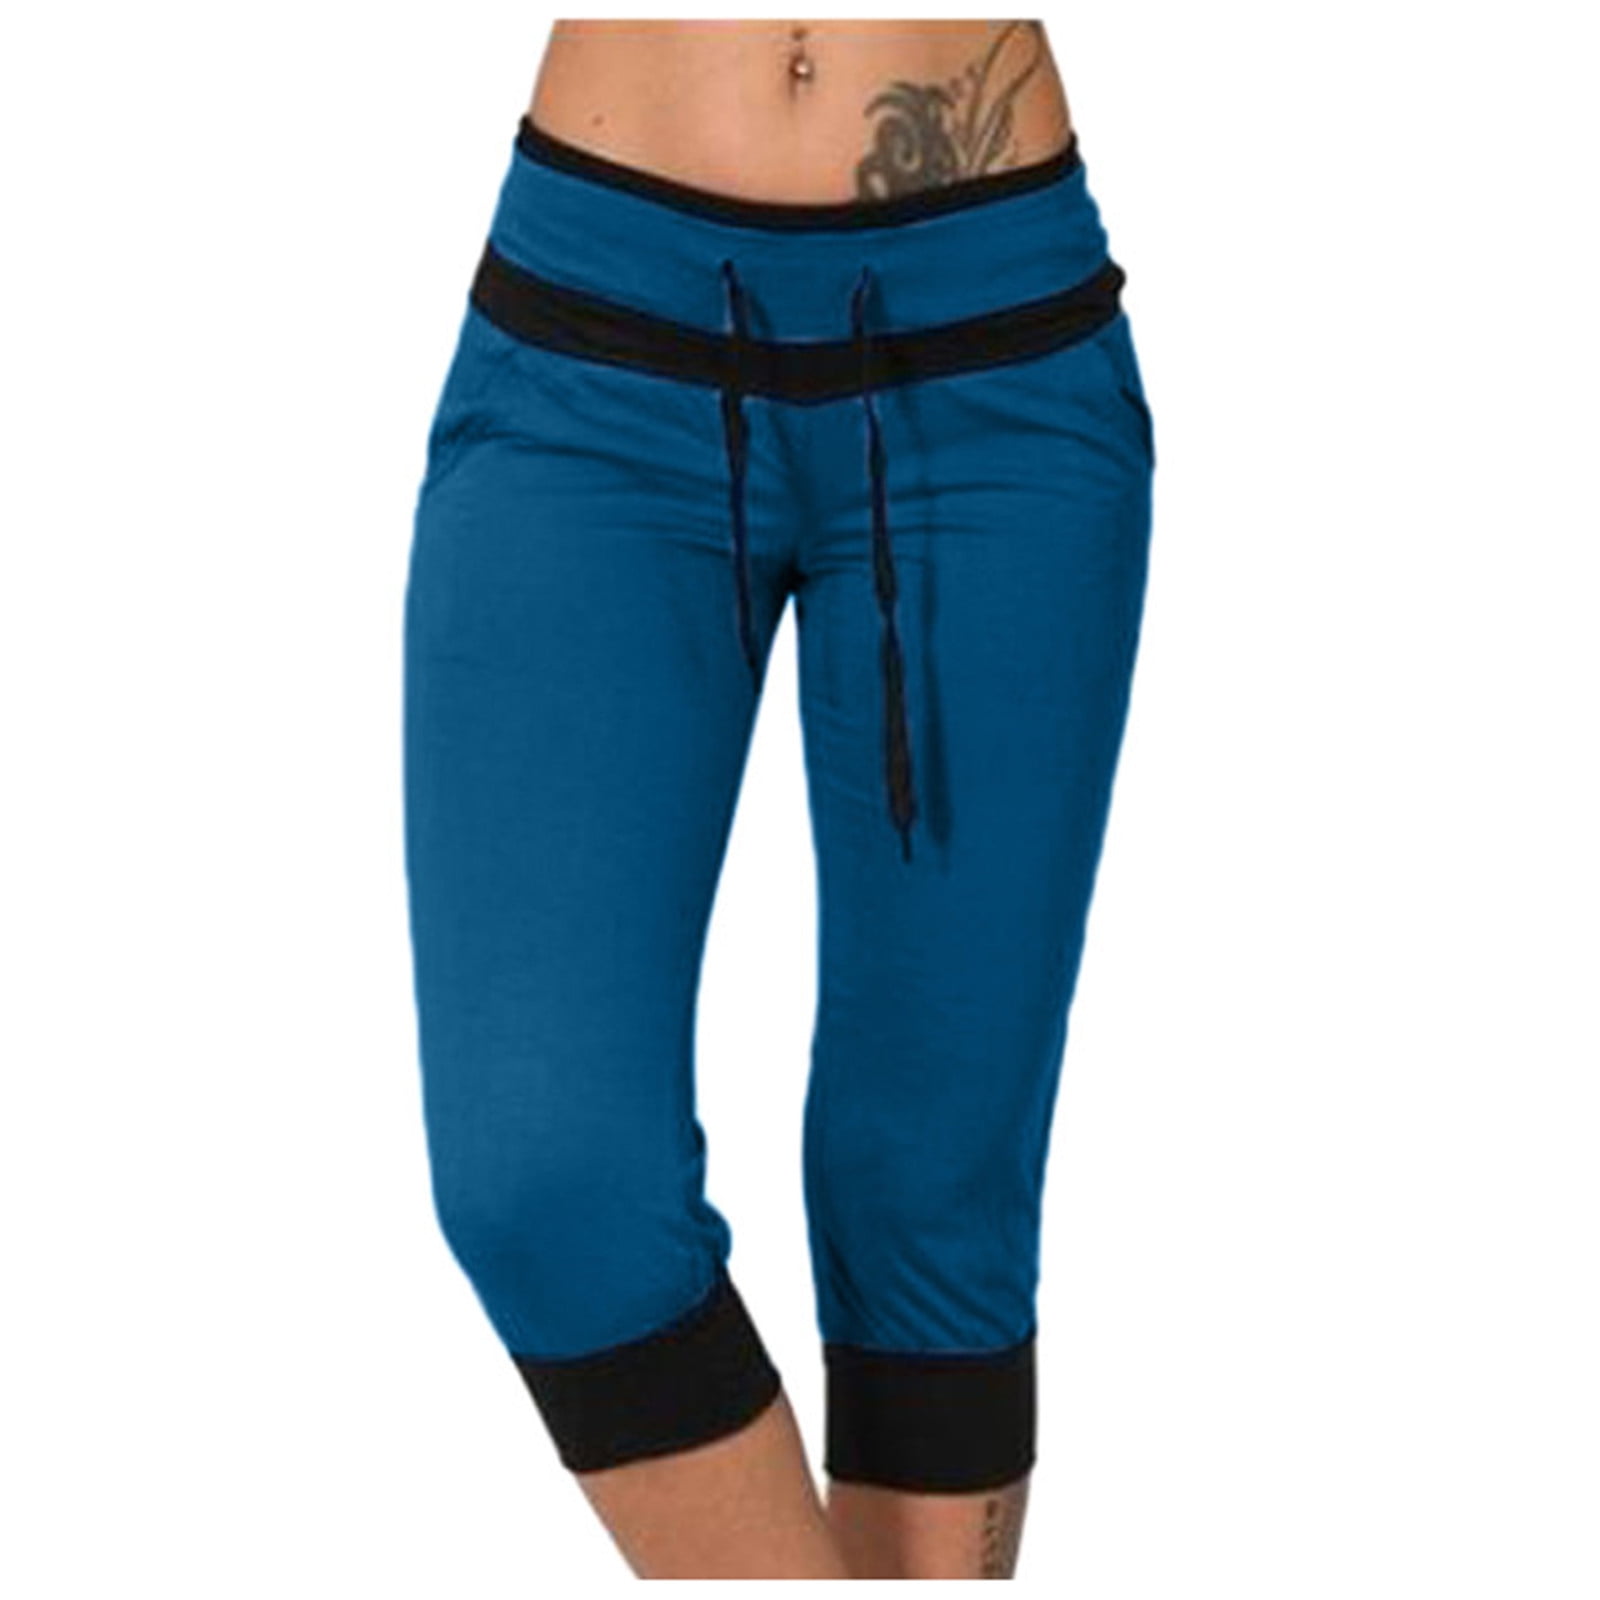 Plus Size Capri Pants for Women Workout Joggers Capris Slacks Stretch  Athletic Yoga Pants High Waisted Drawstring (Large, Dark Blue)